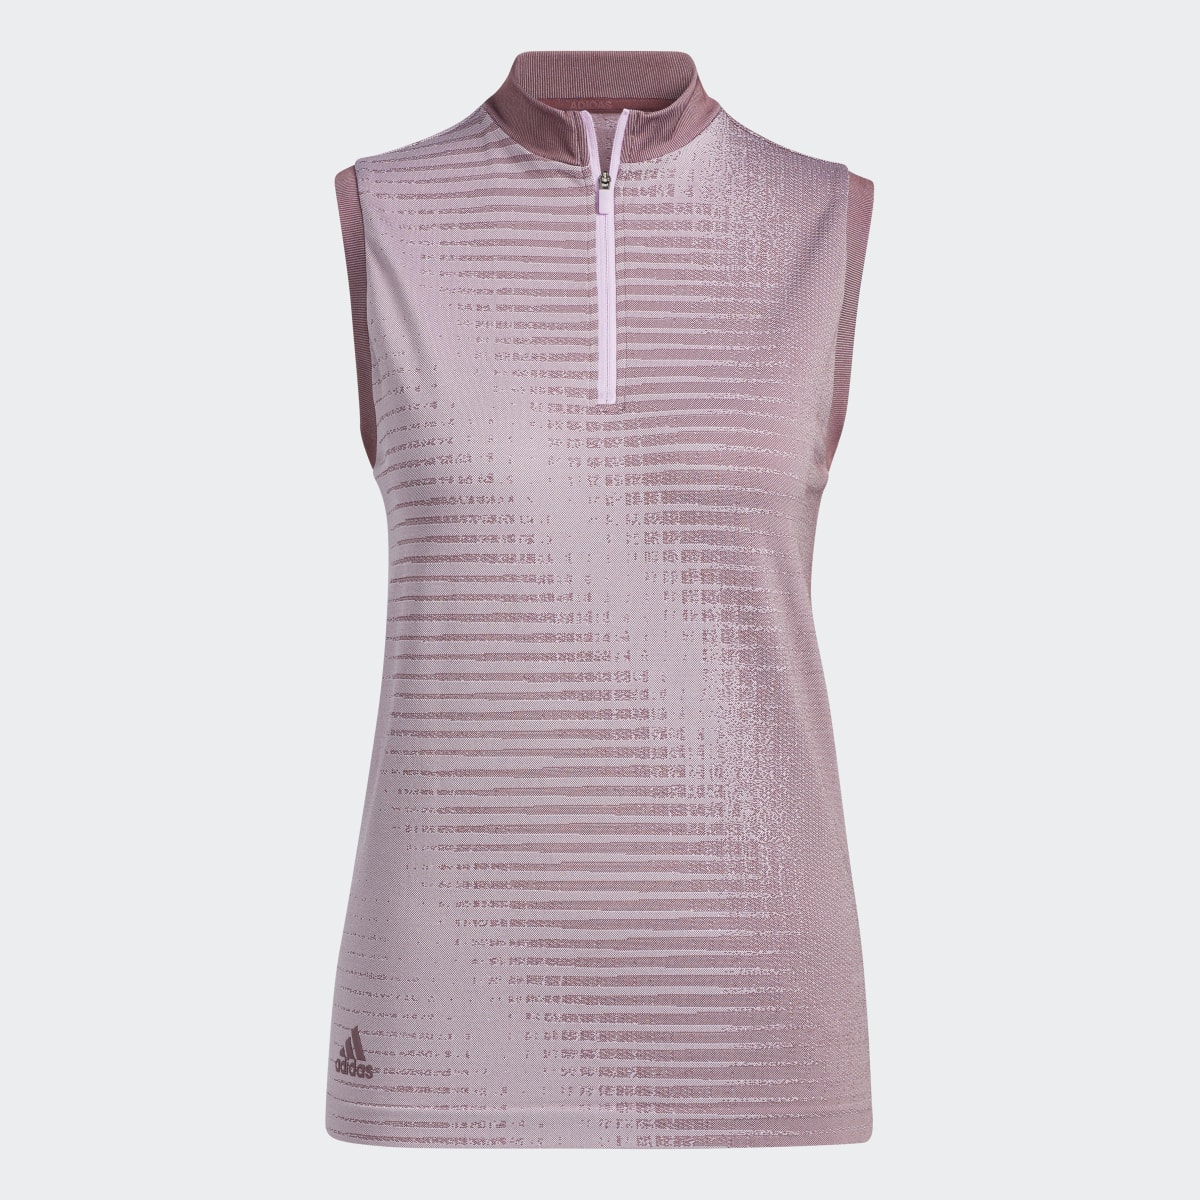 Adidas Primeknit Sleeveless Polo Shirt. 5